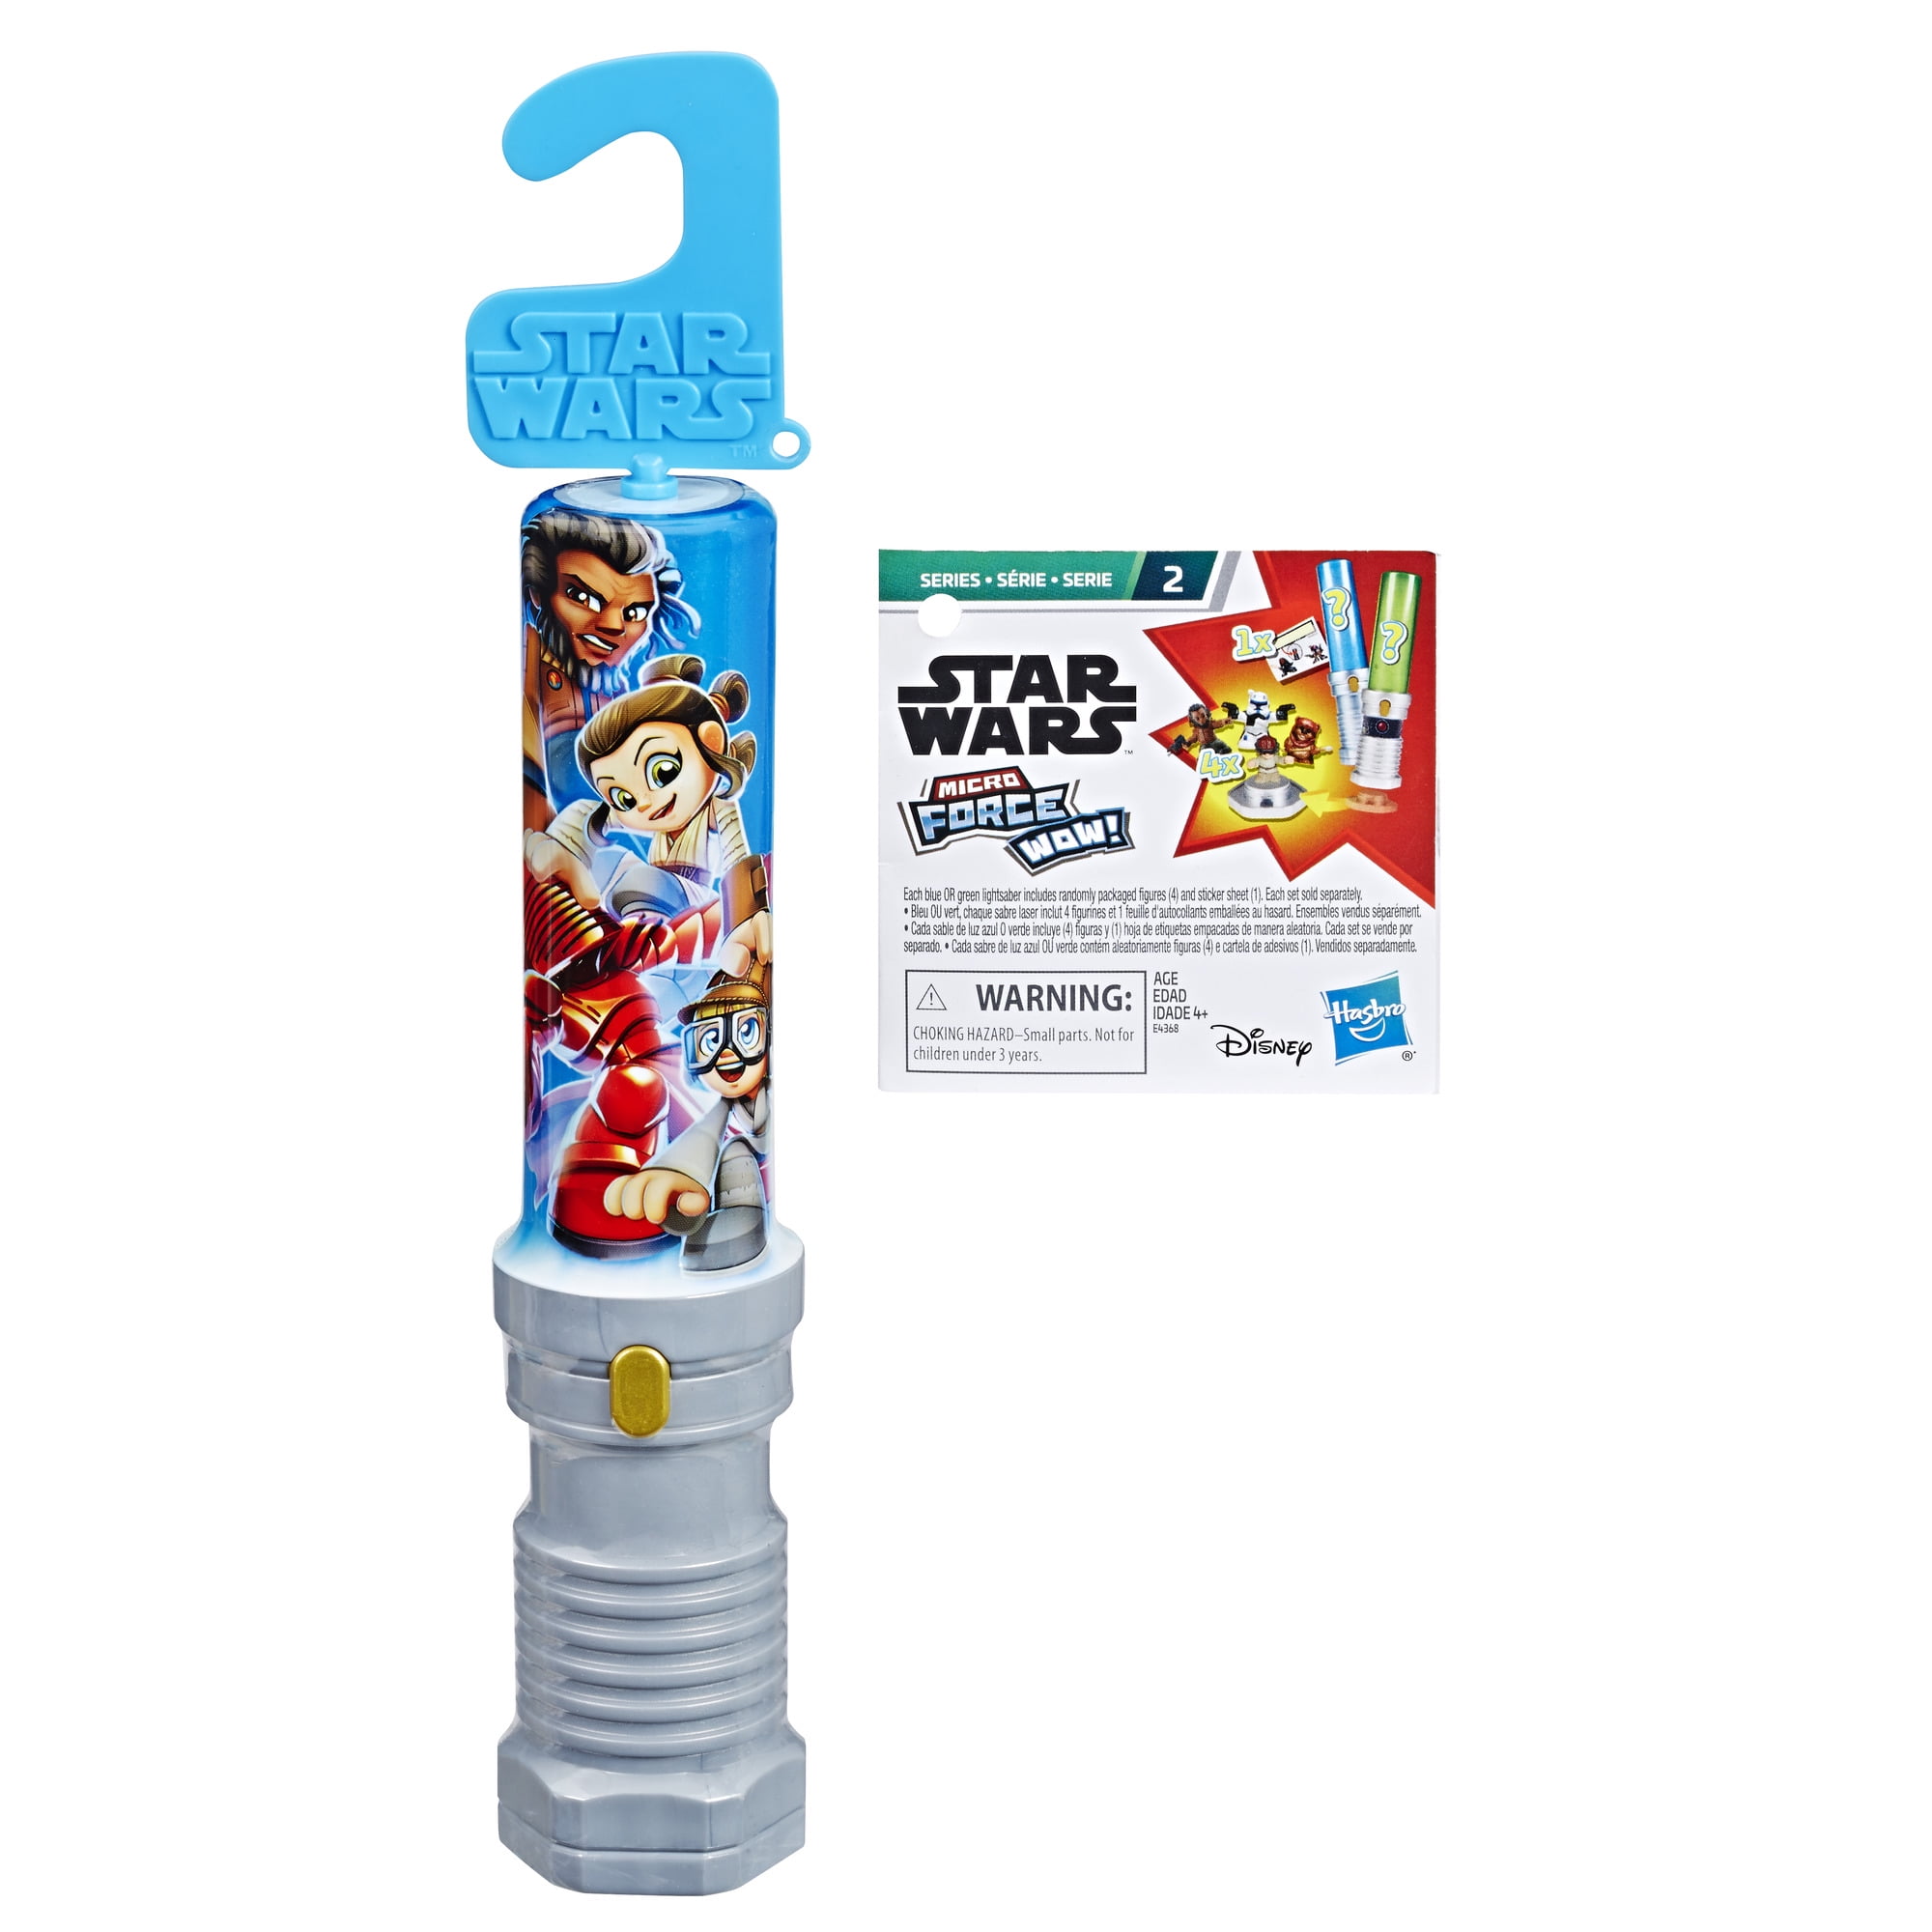 Disney Star Wars Microforce Series 1 Chewbacca Figurine 